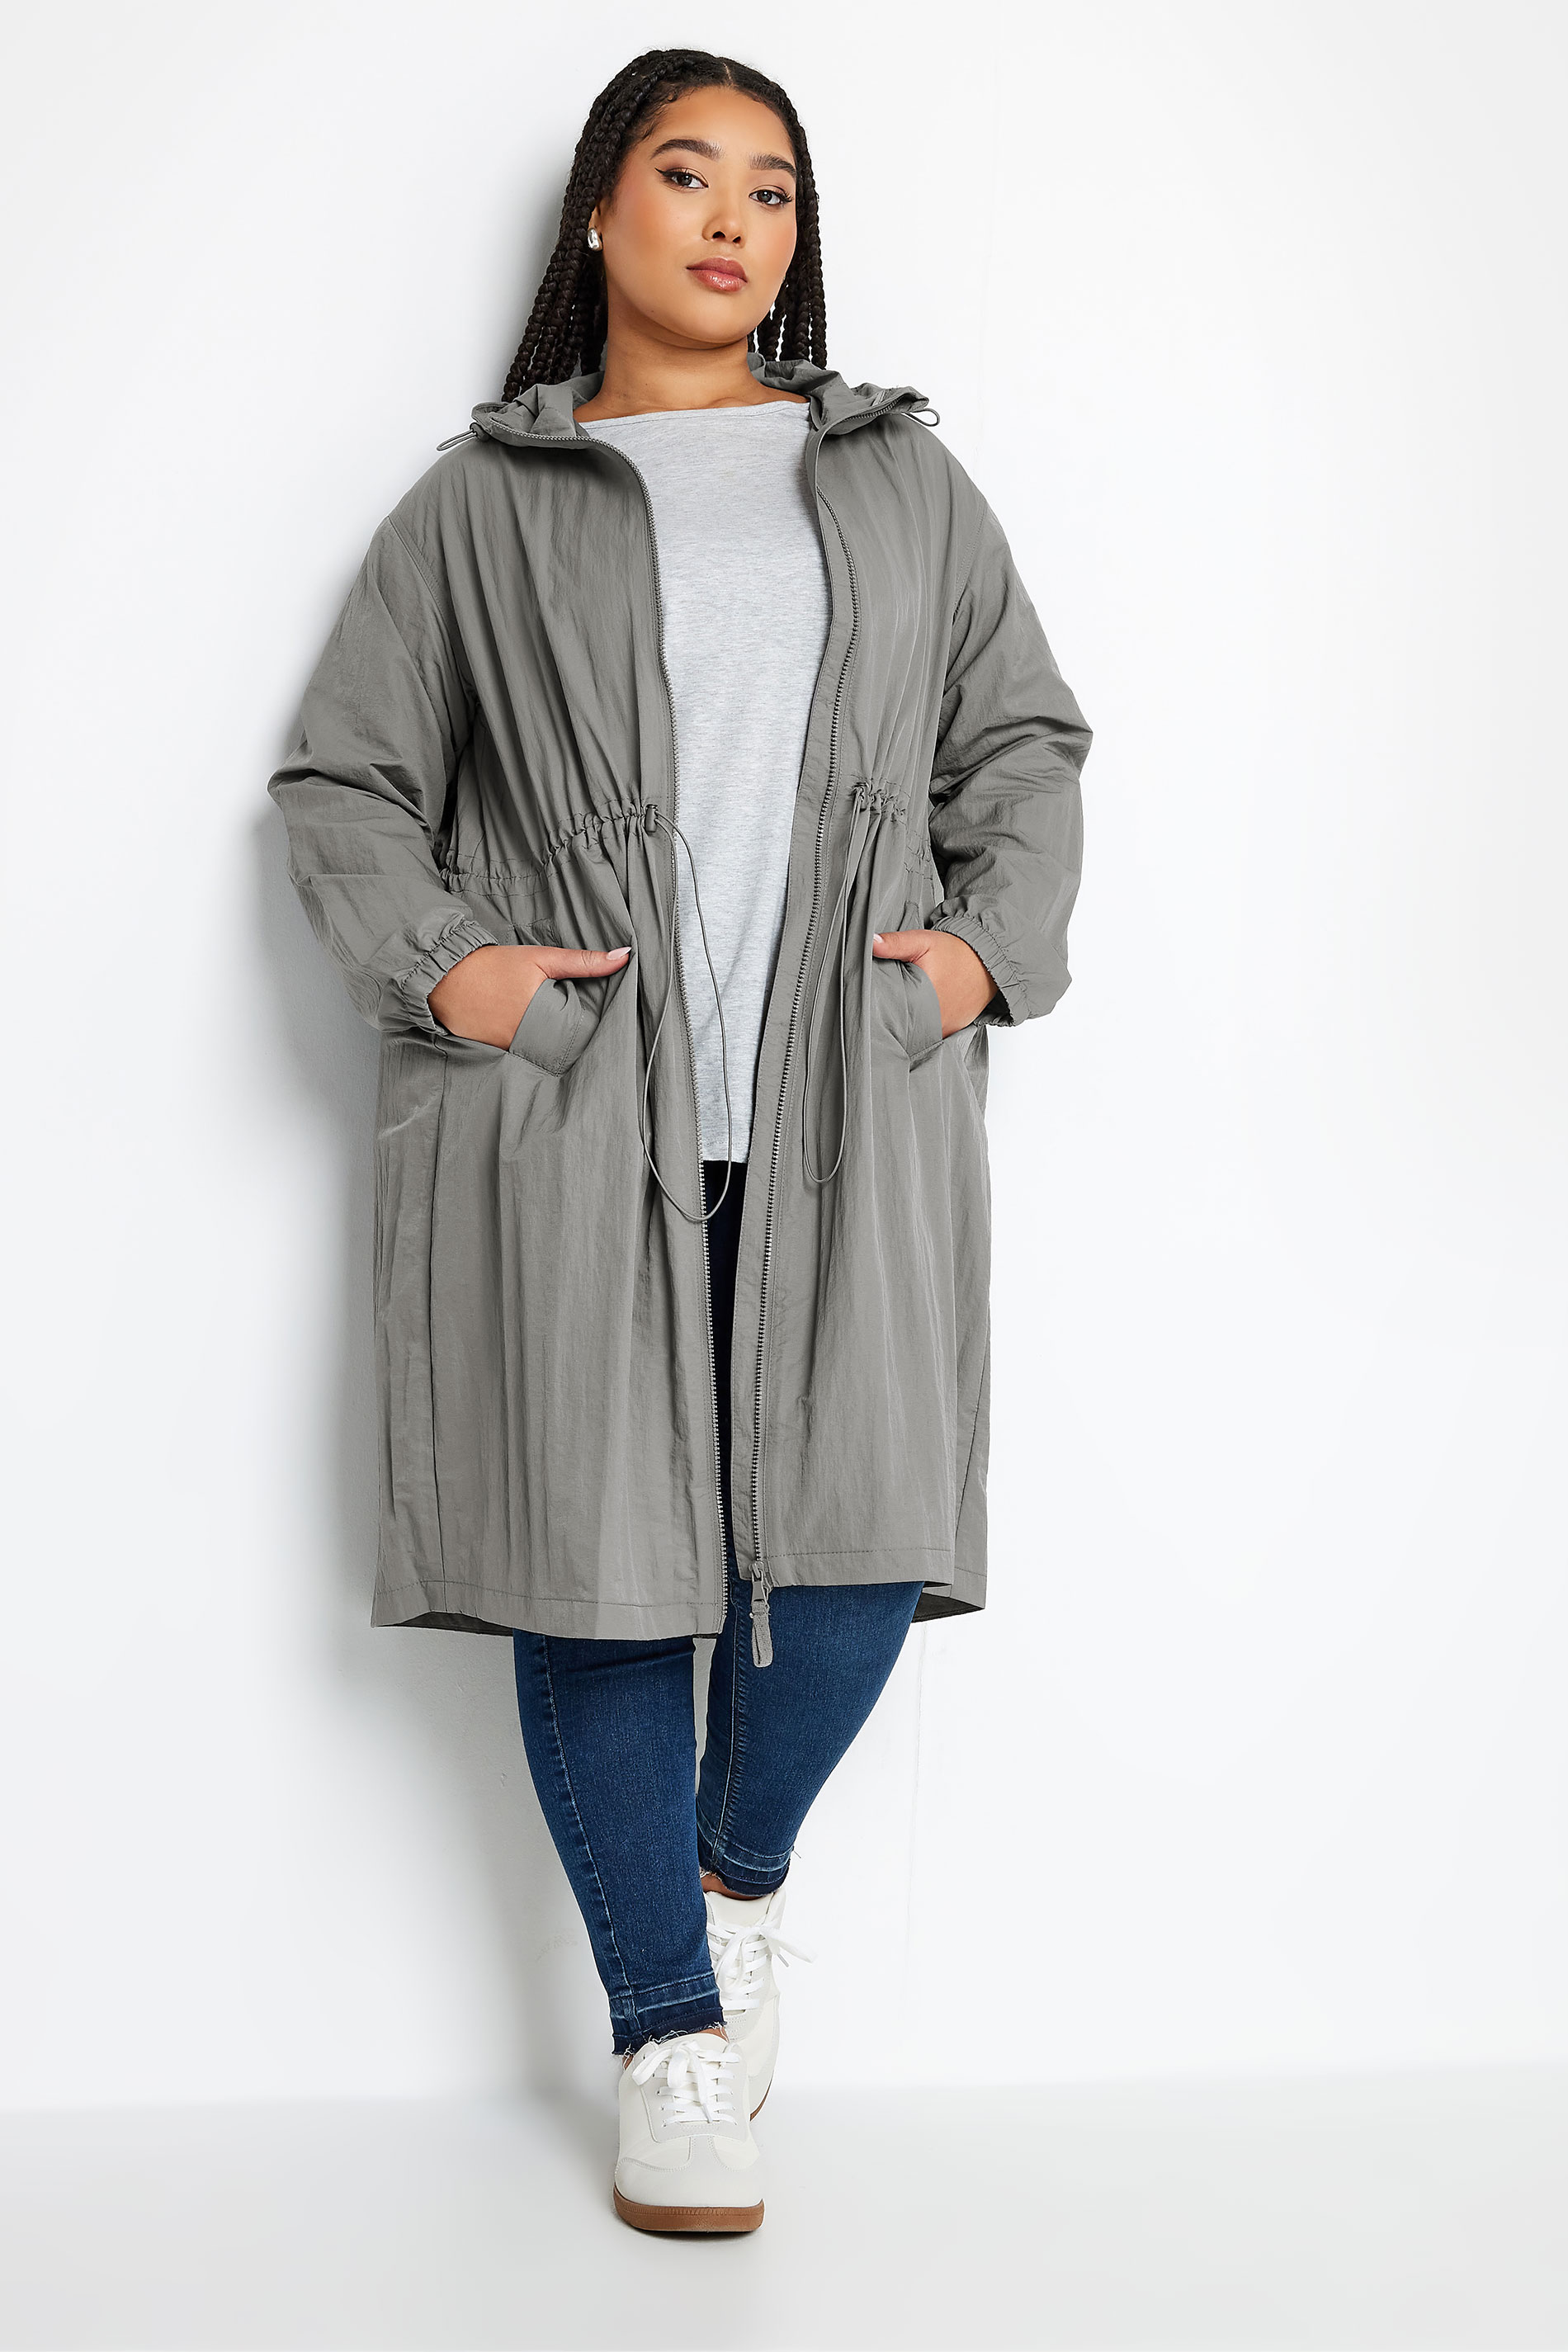 YOURS Plus Size Grey Lightweight Longline Parka Jacket | Yours Clothing 2